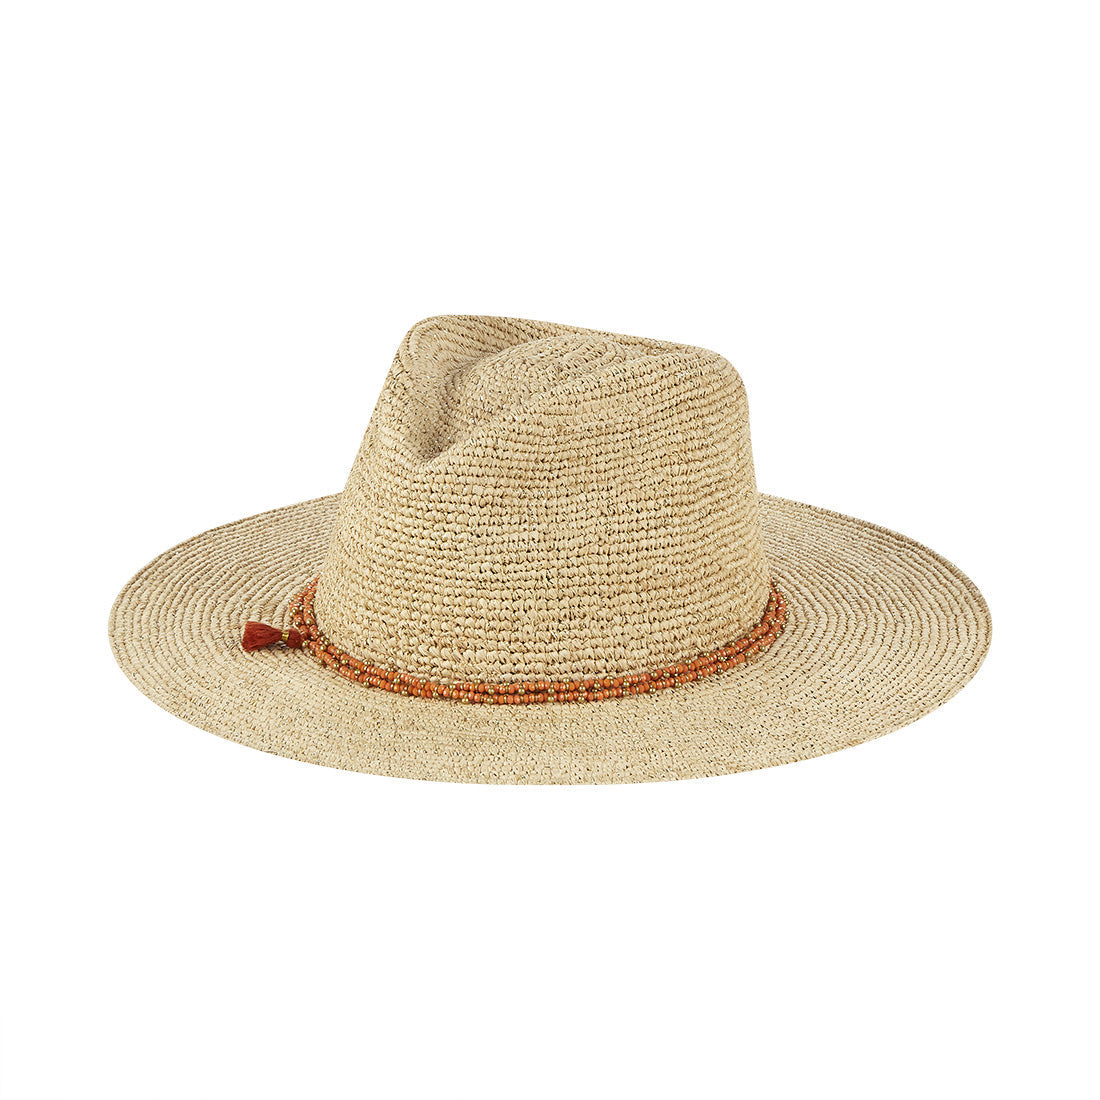 Sinclair Hat - Premium Hat from Marina St Barth - Just $260.00! Shop now at Marina St Barth